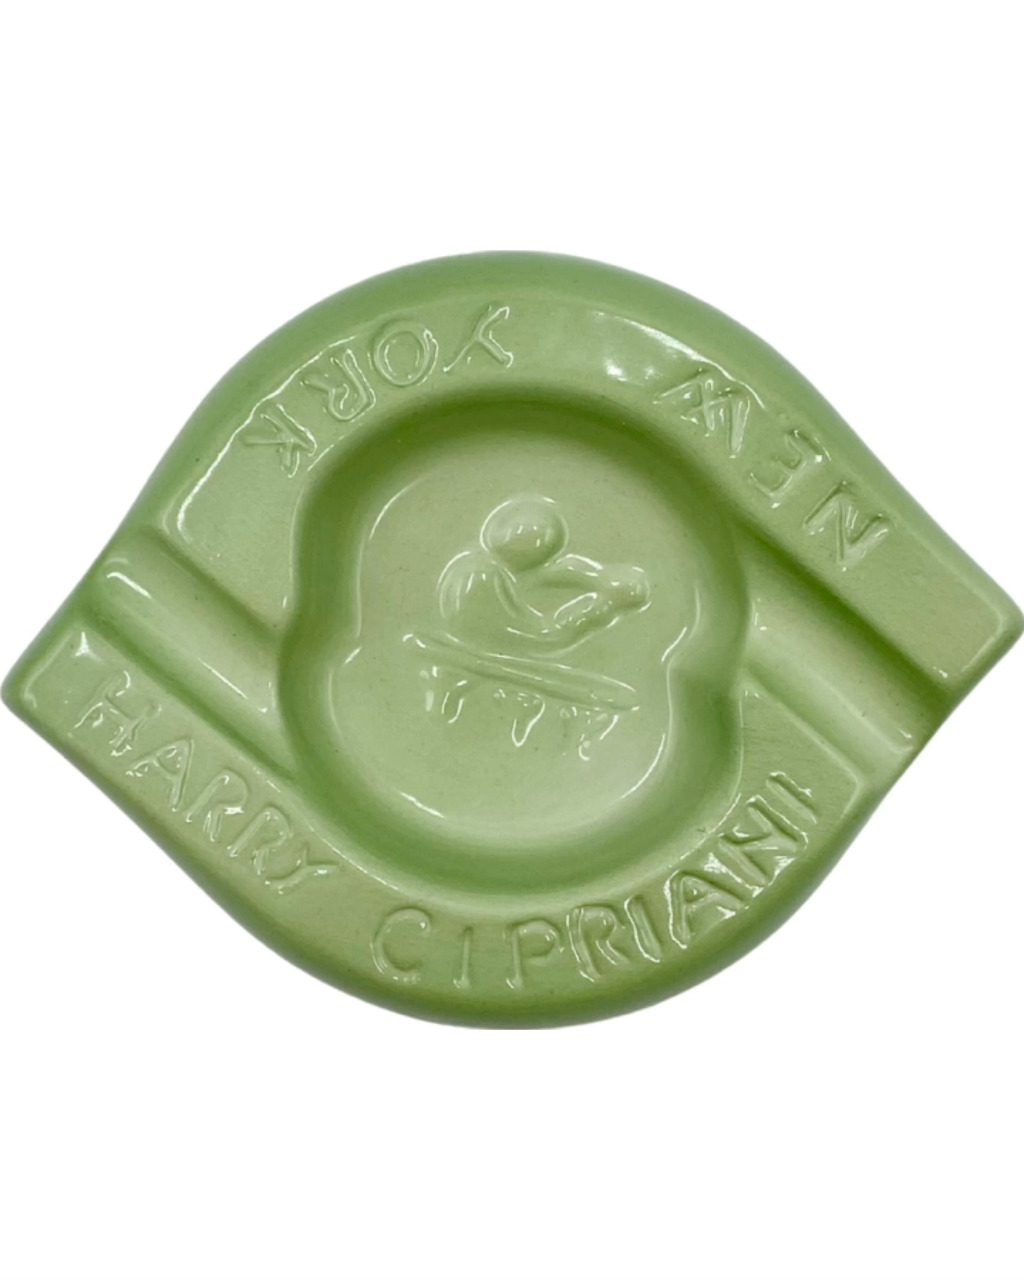 Vintage Harry Cipriani New York NYC Restaurant Green Ceramic Ashtray Dish